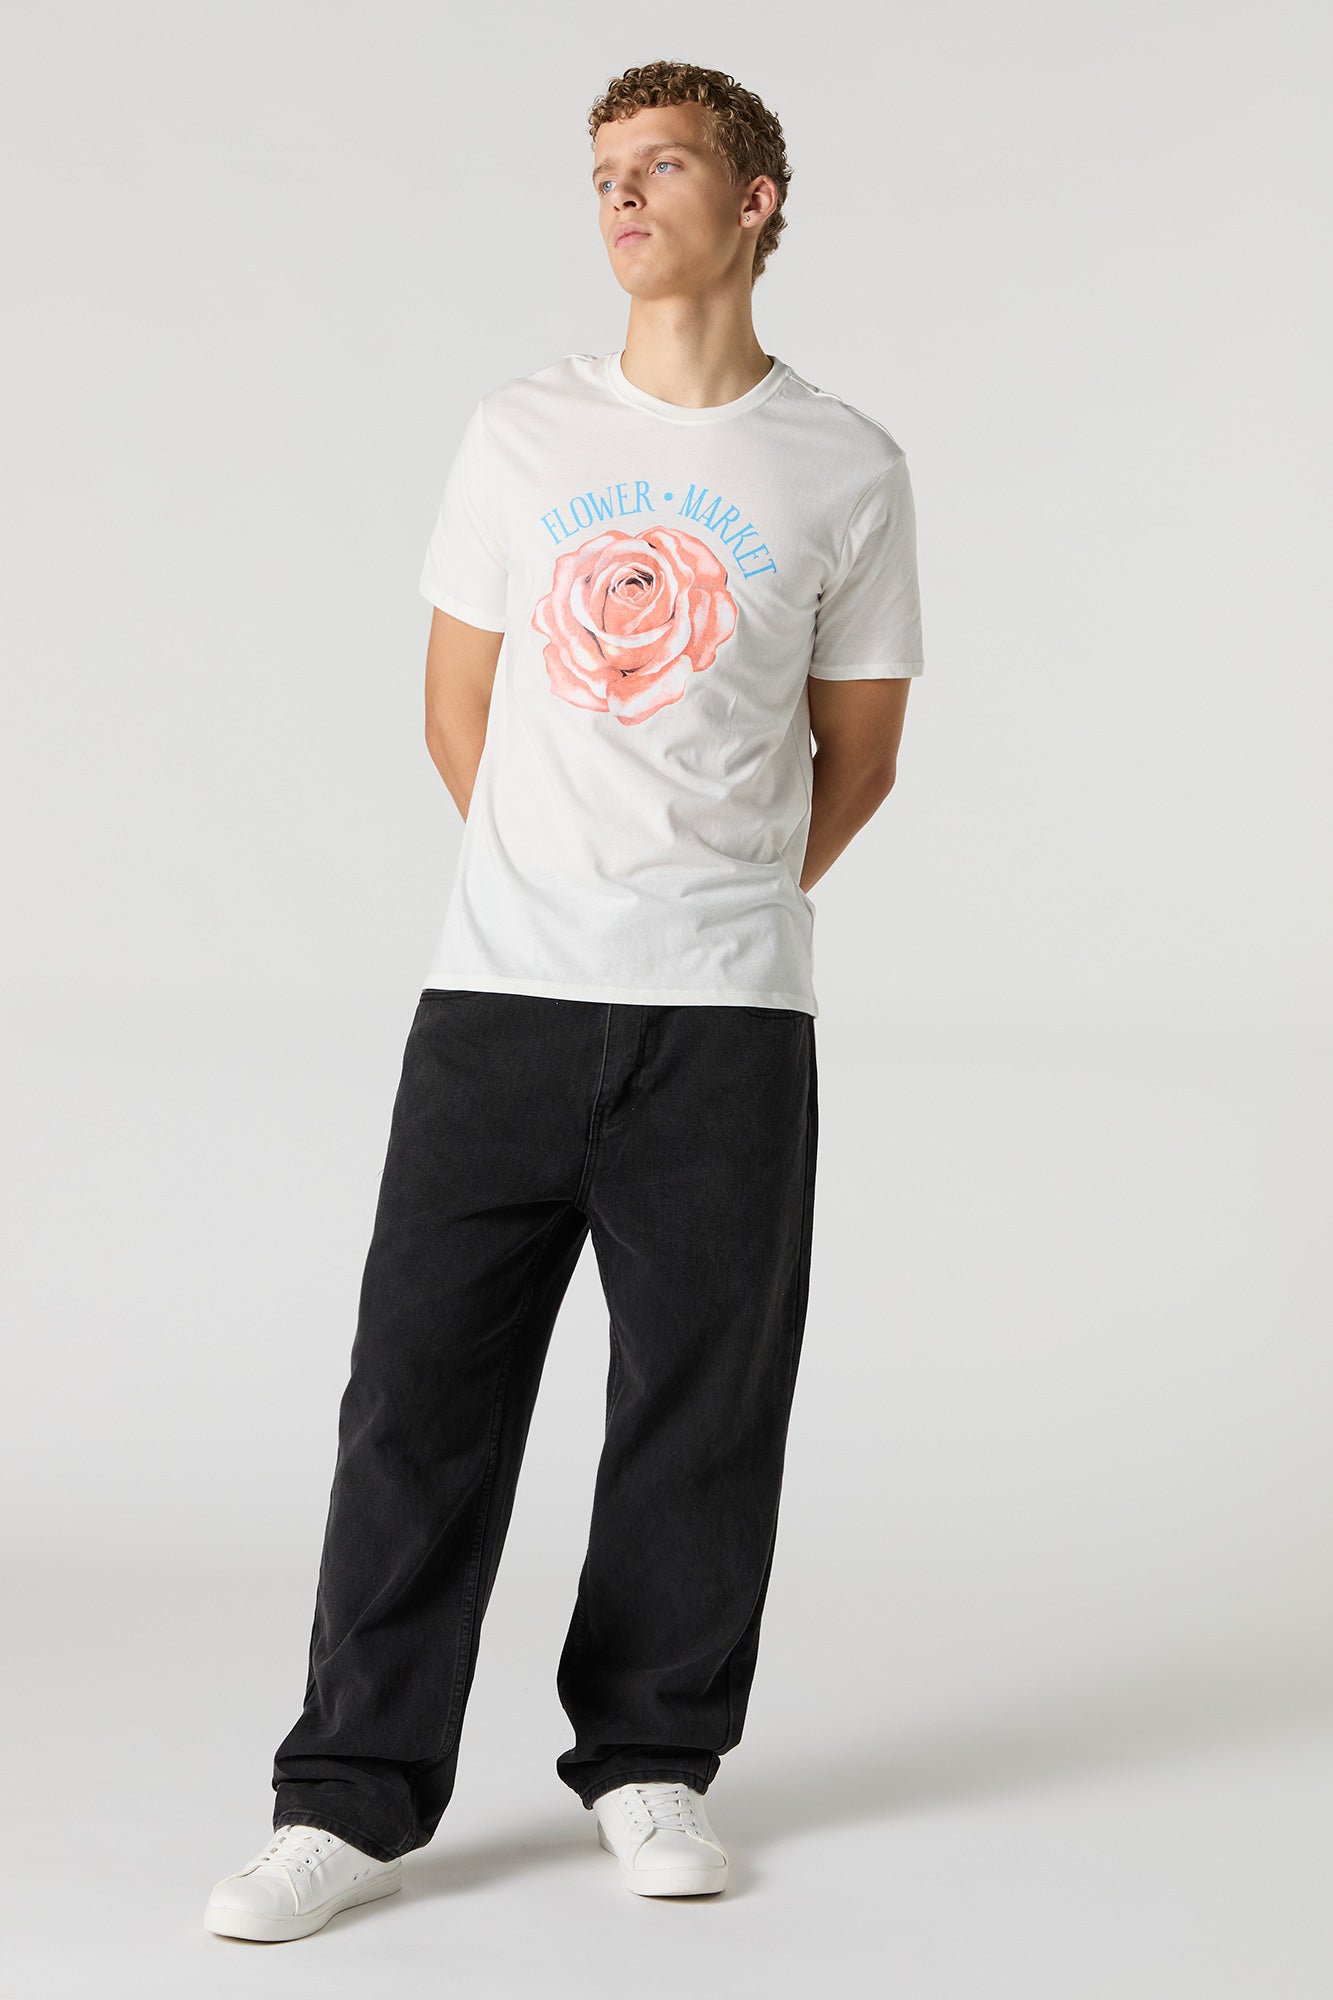 Flower Market Graphic T-Shirt